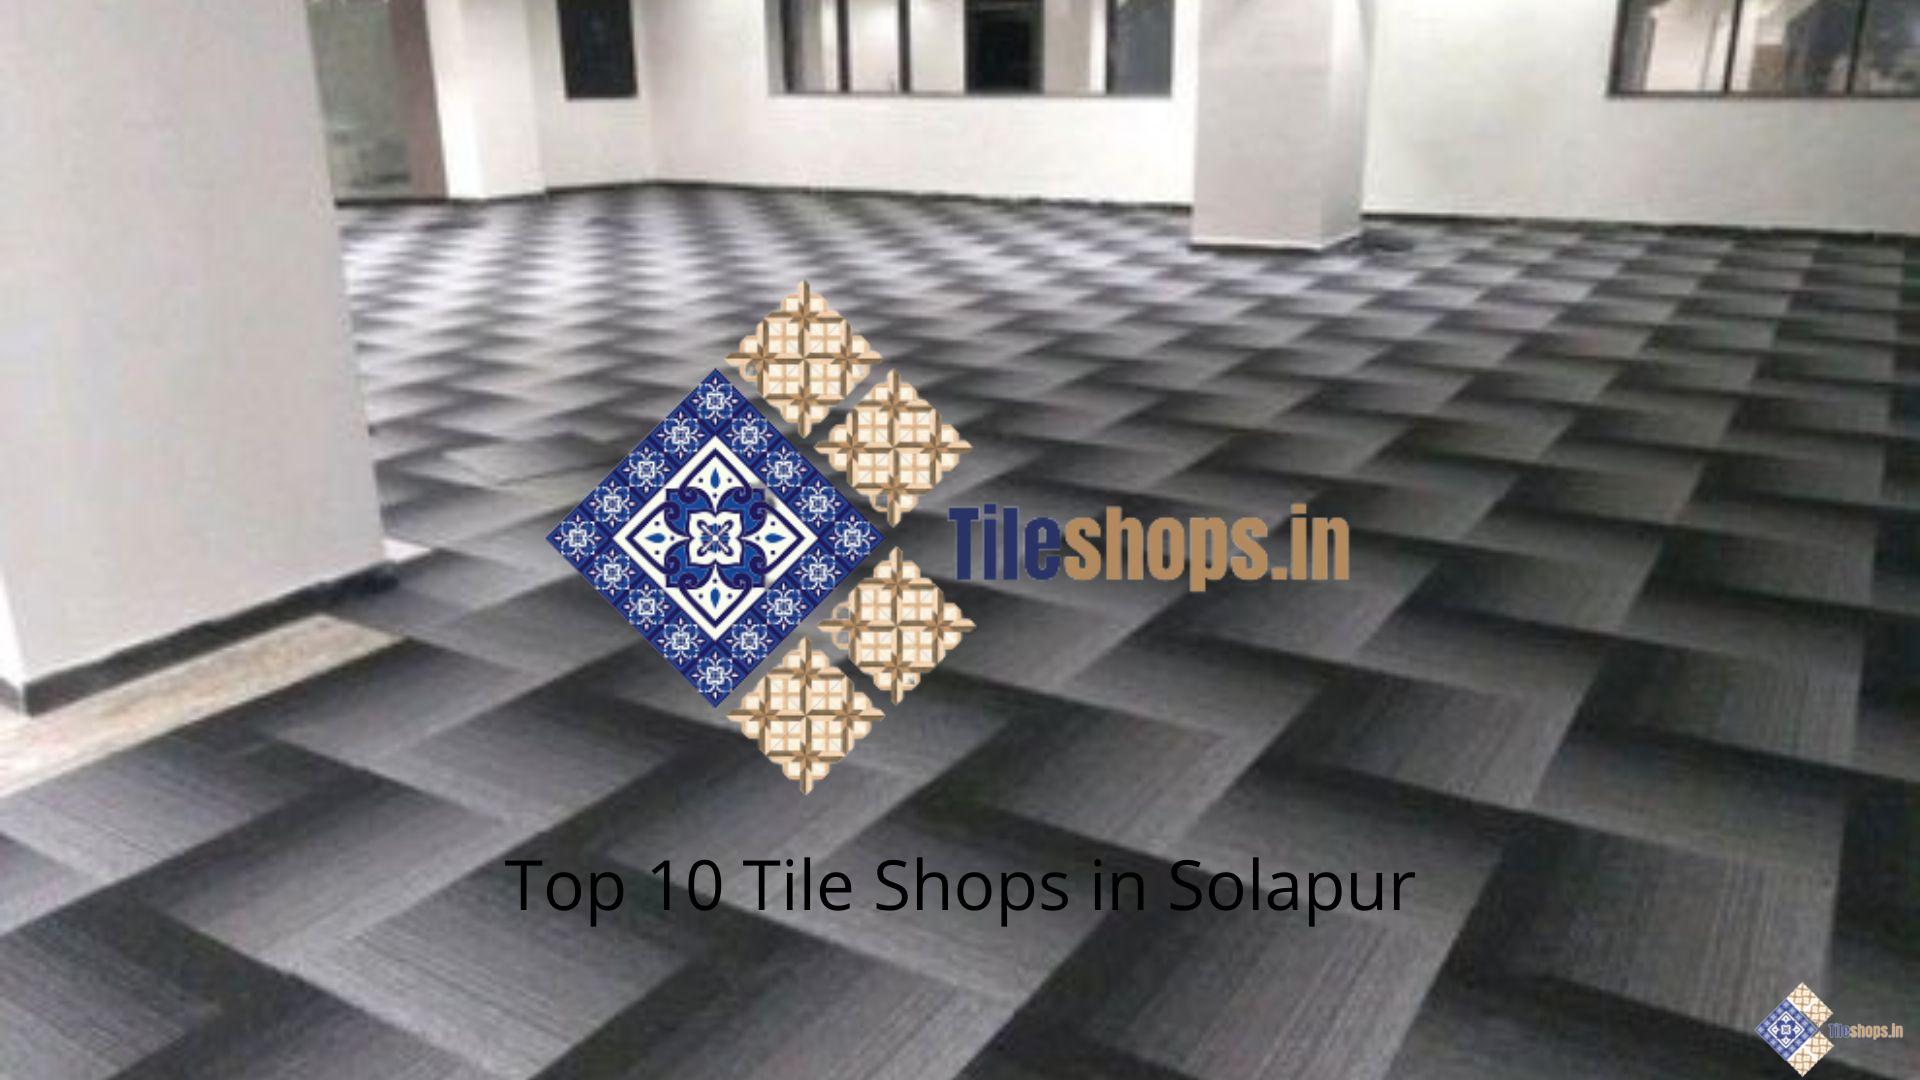 Top 10 Tile Shops in Solapur